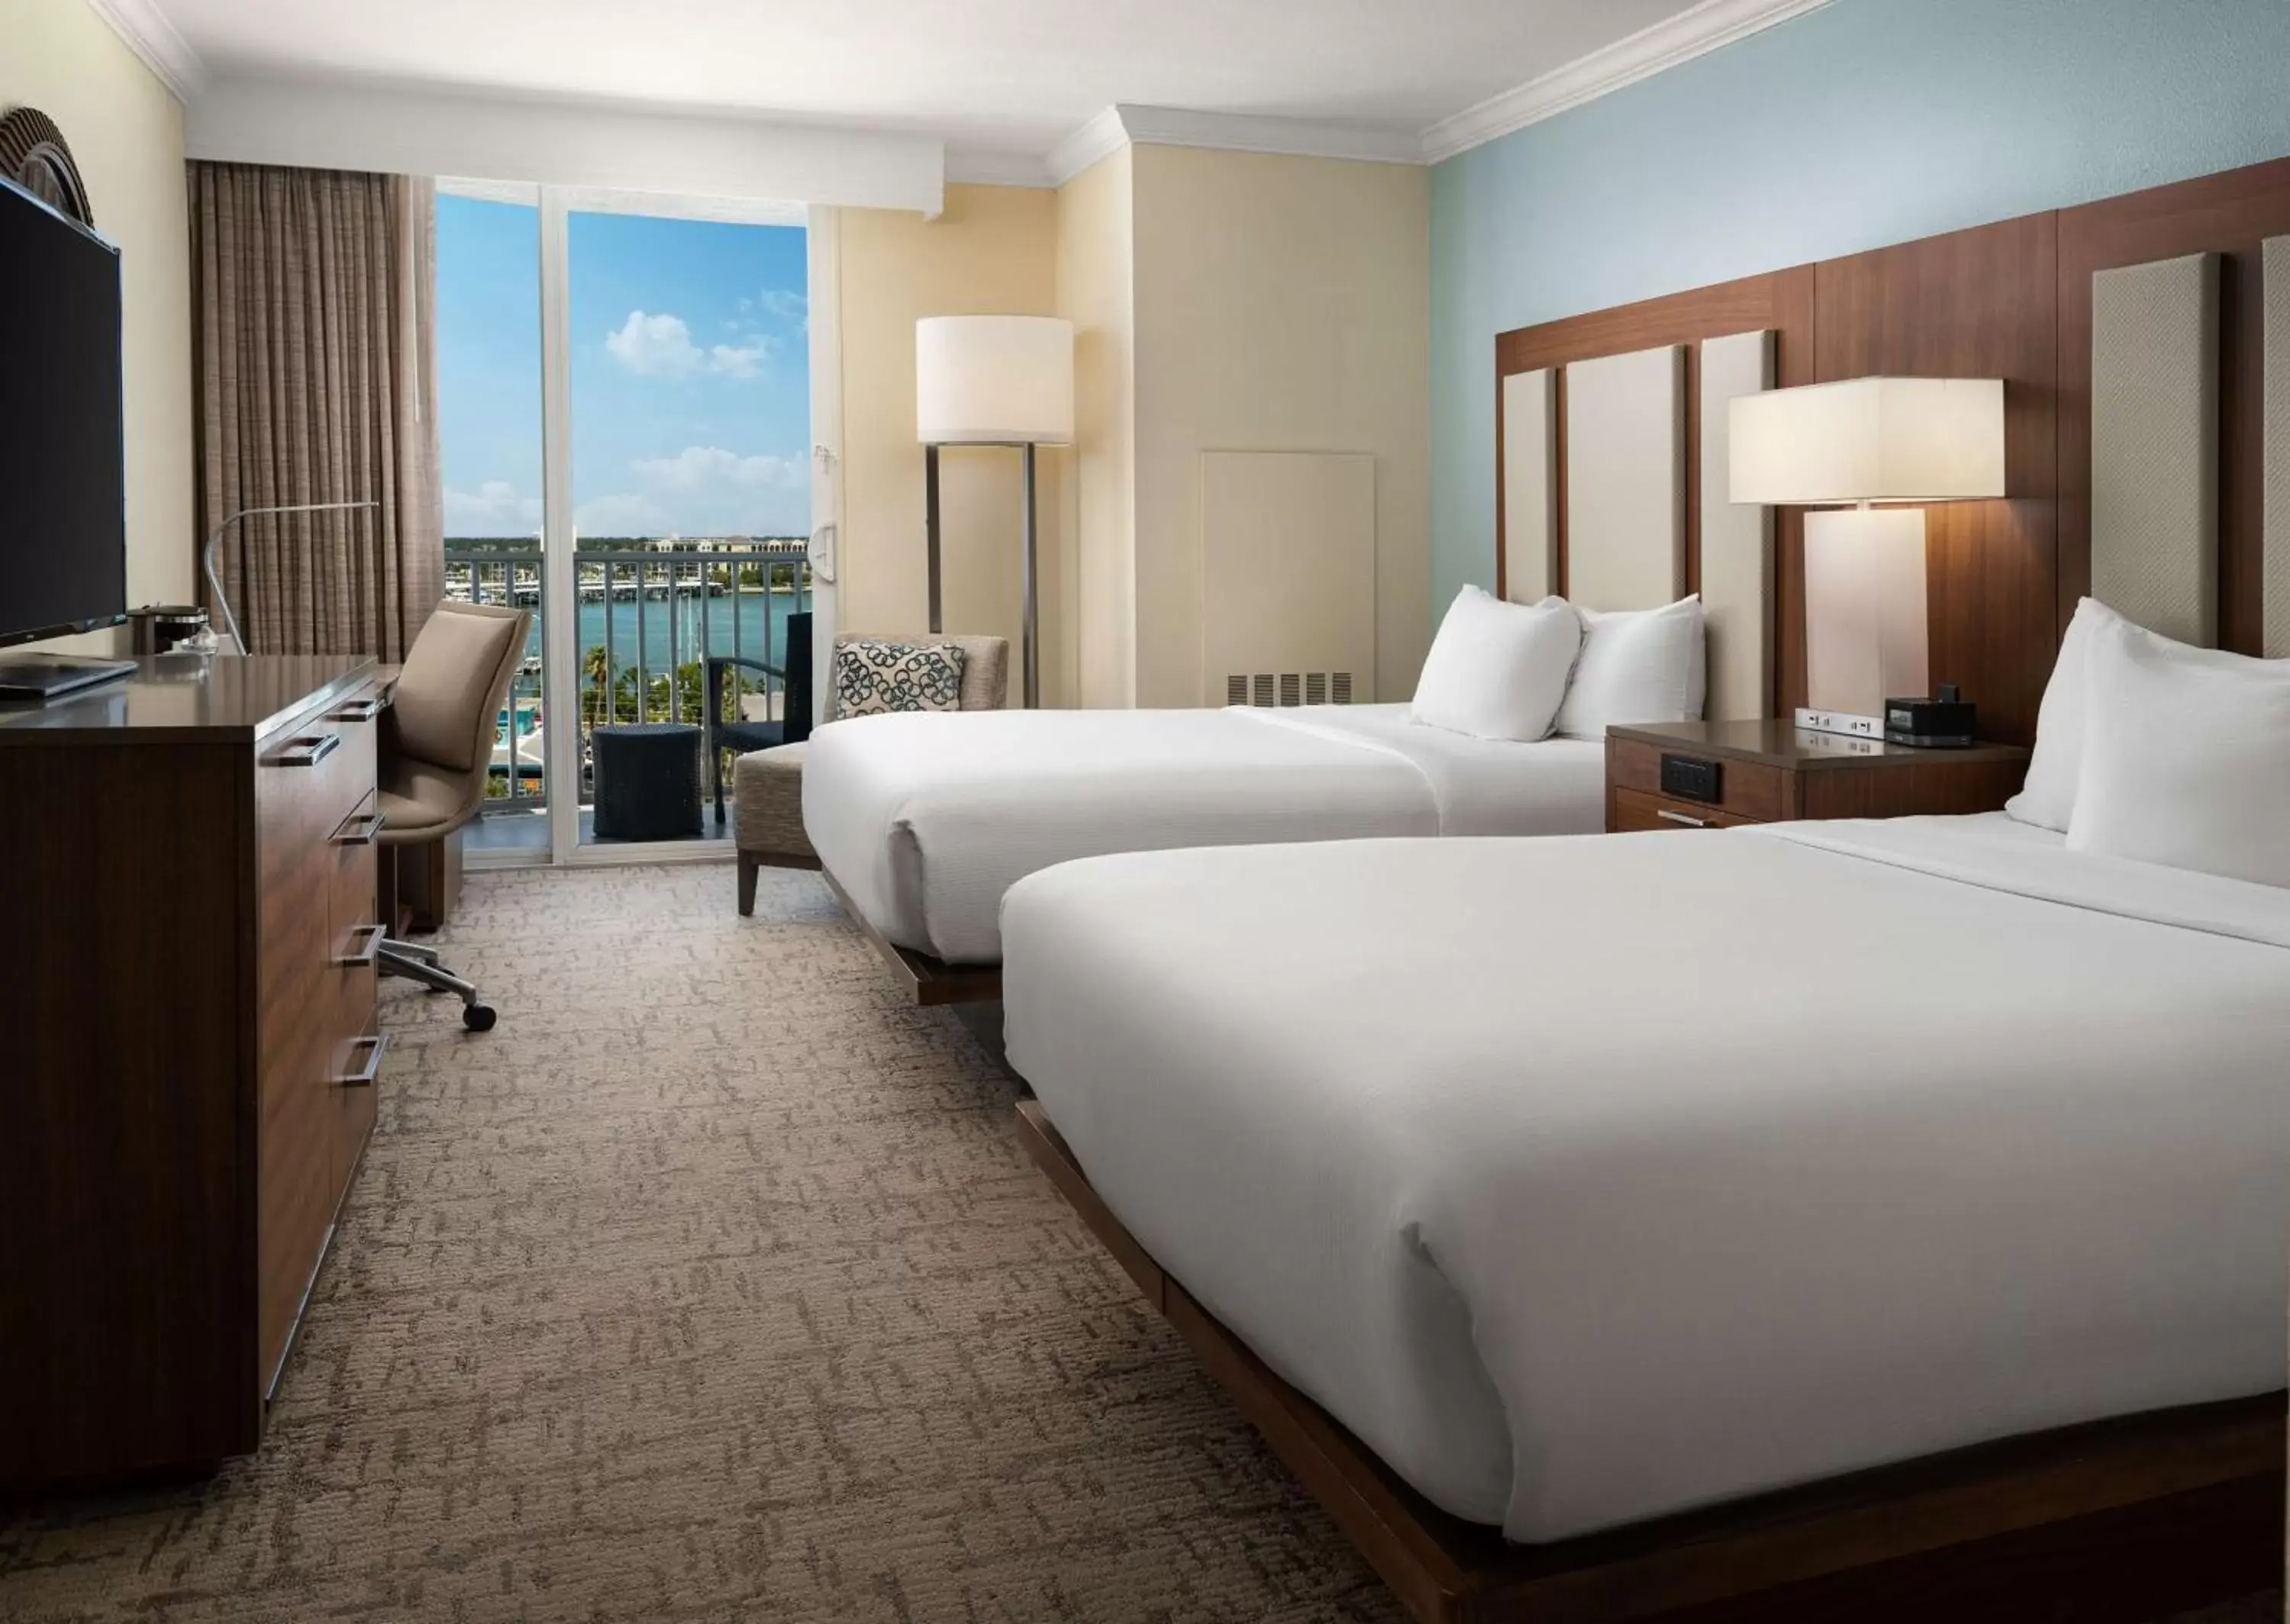 Bedroom in Hilton Clearwater Beach Resort & Spa